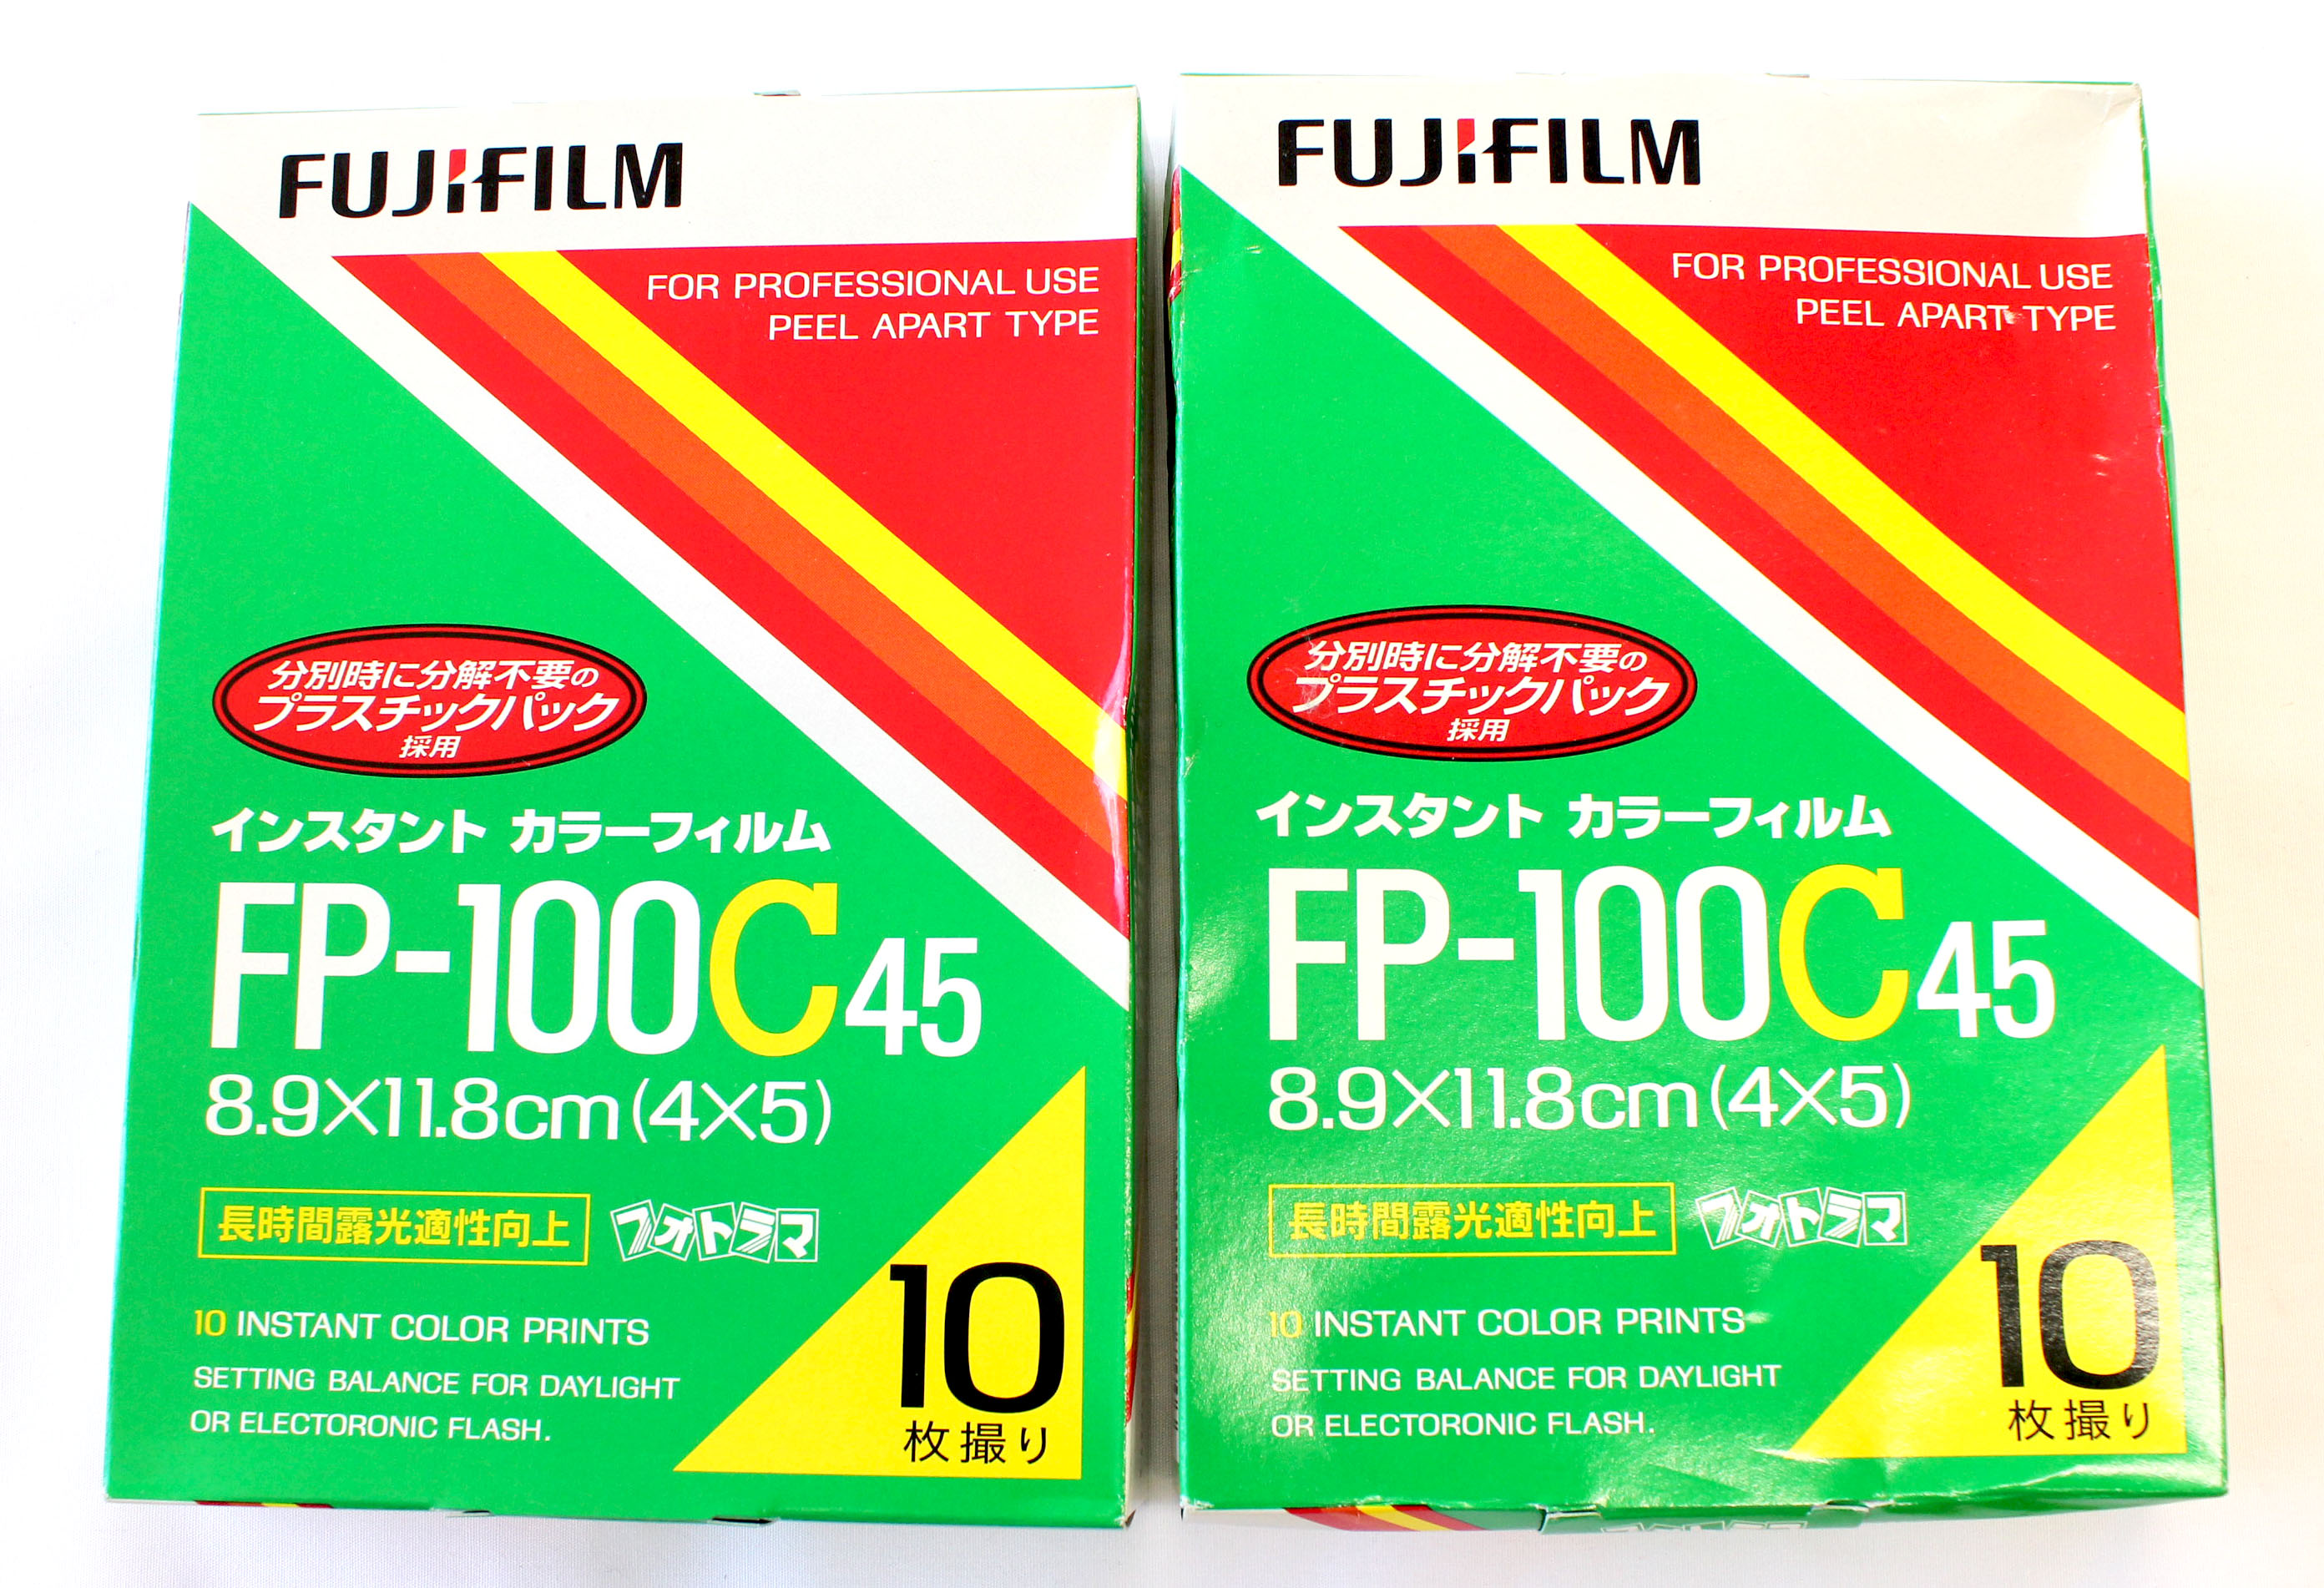 Japan Used Camera Shop | [New] Fuji Fujifilm FP-100C45 4x5 8.9x11.8cm Instant Color Film Set of 2 (EXP 07/2016)